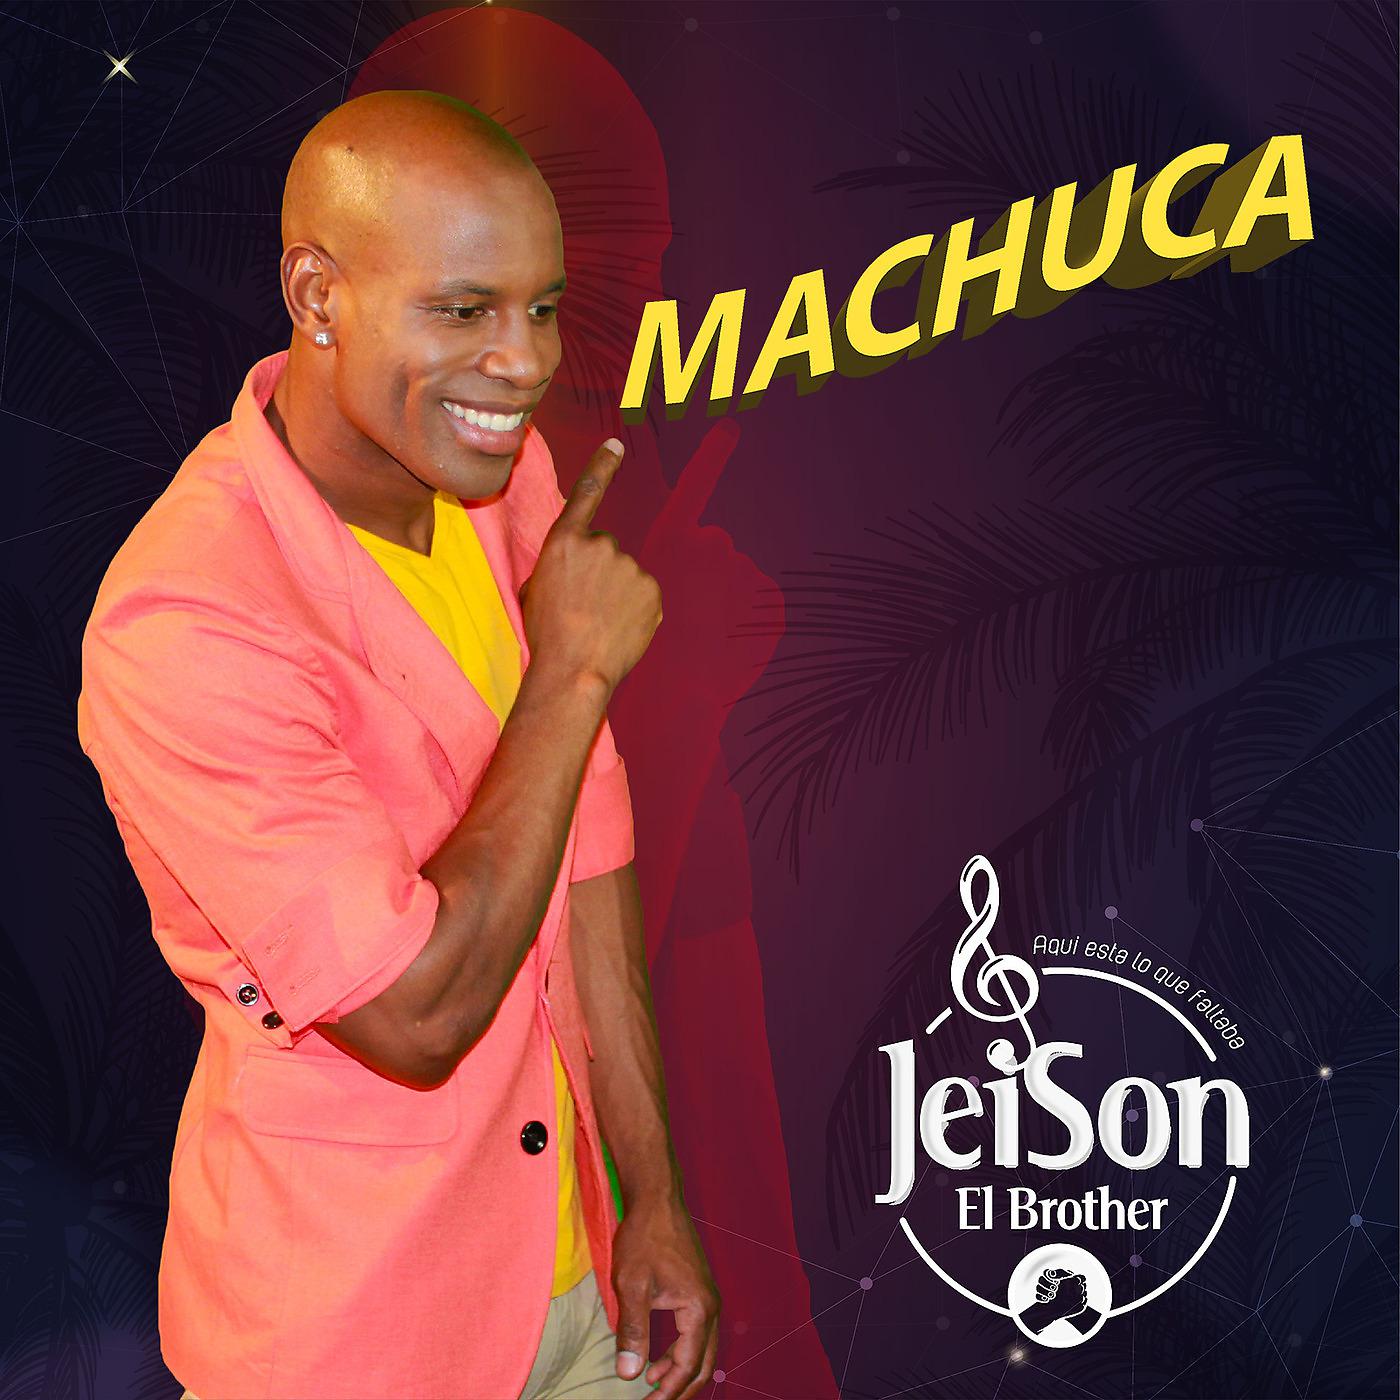 Постер альбома Machuca